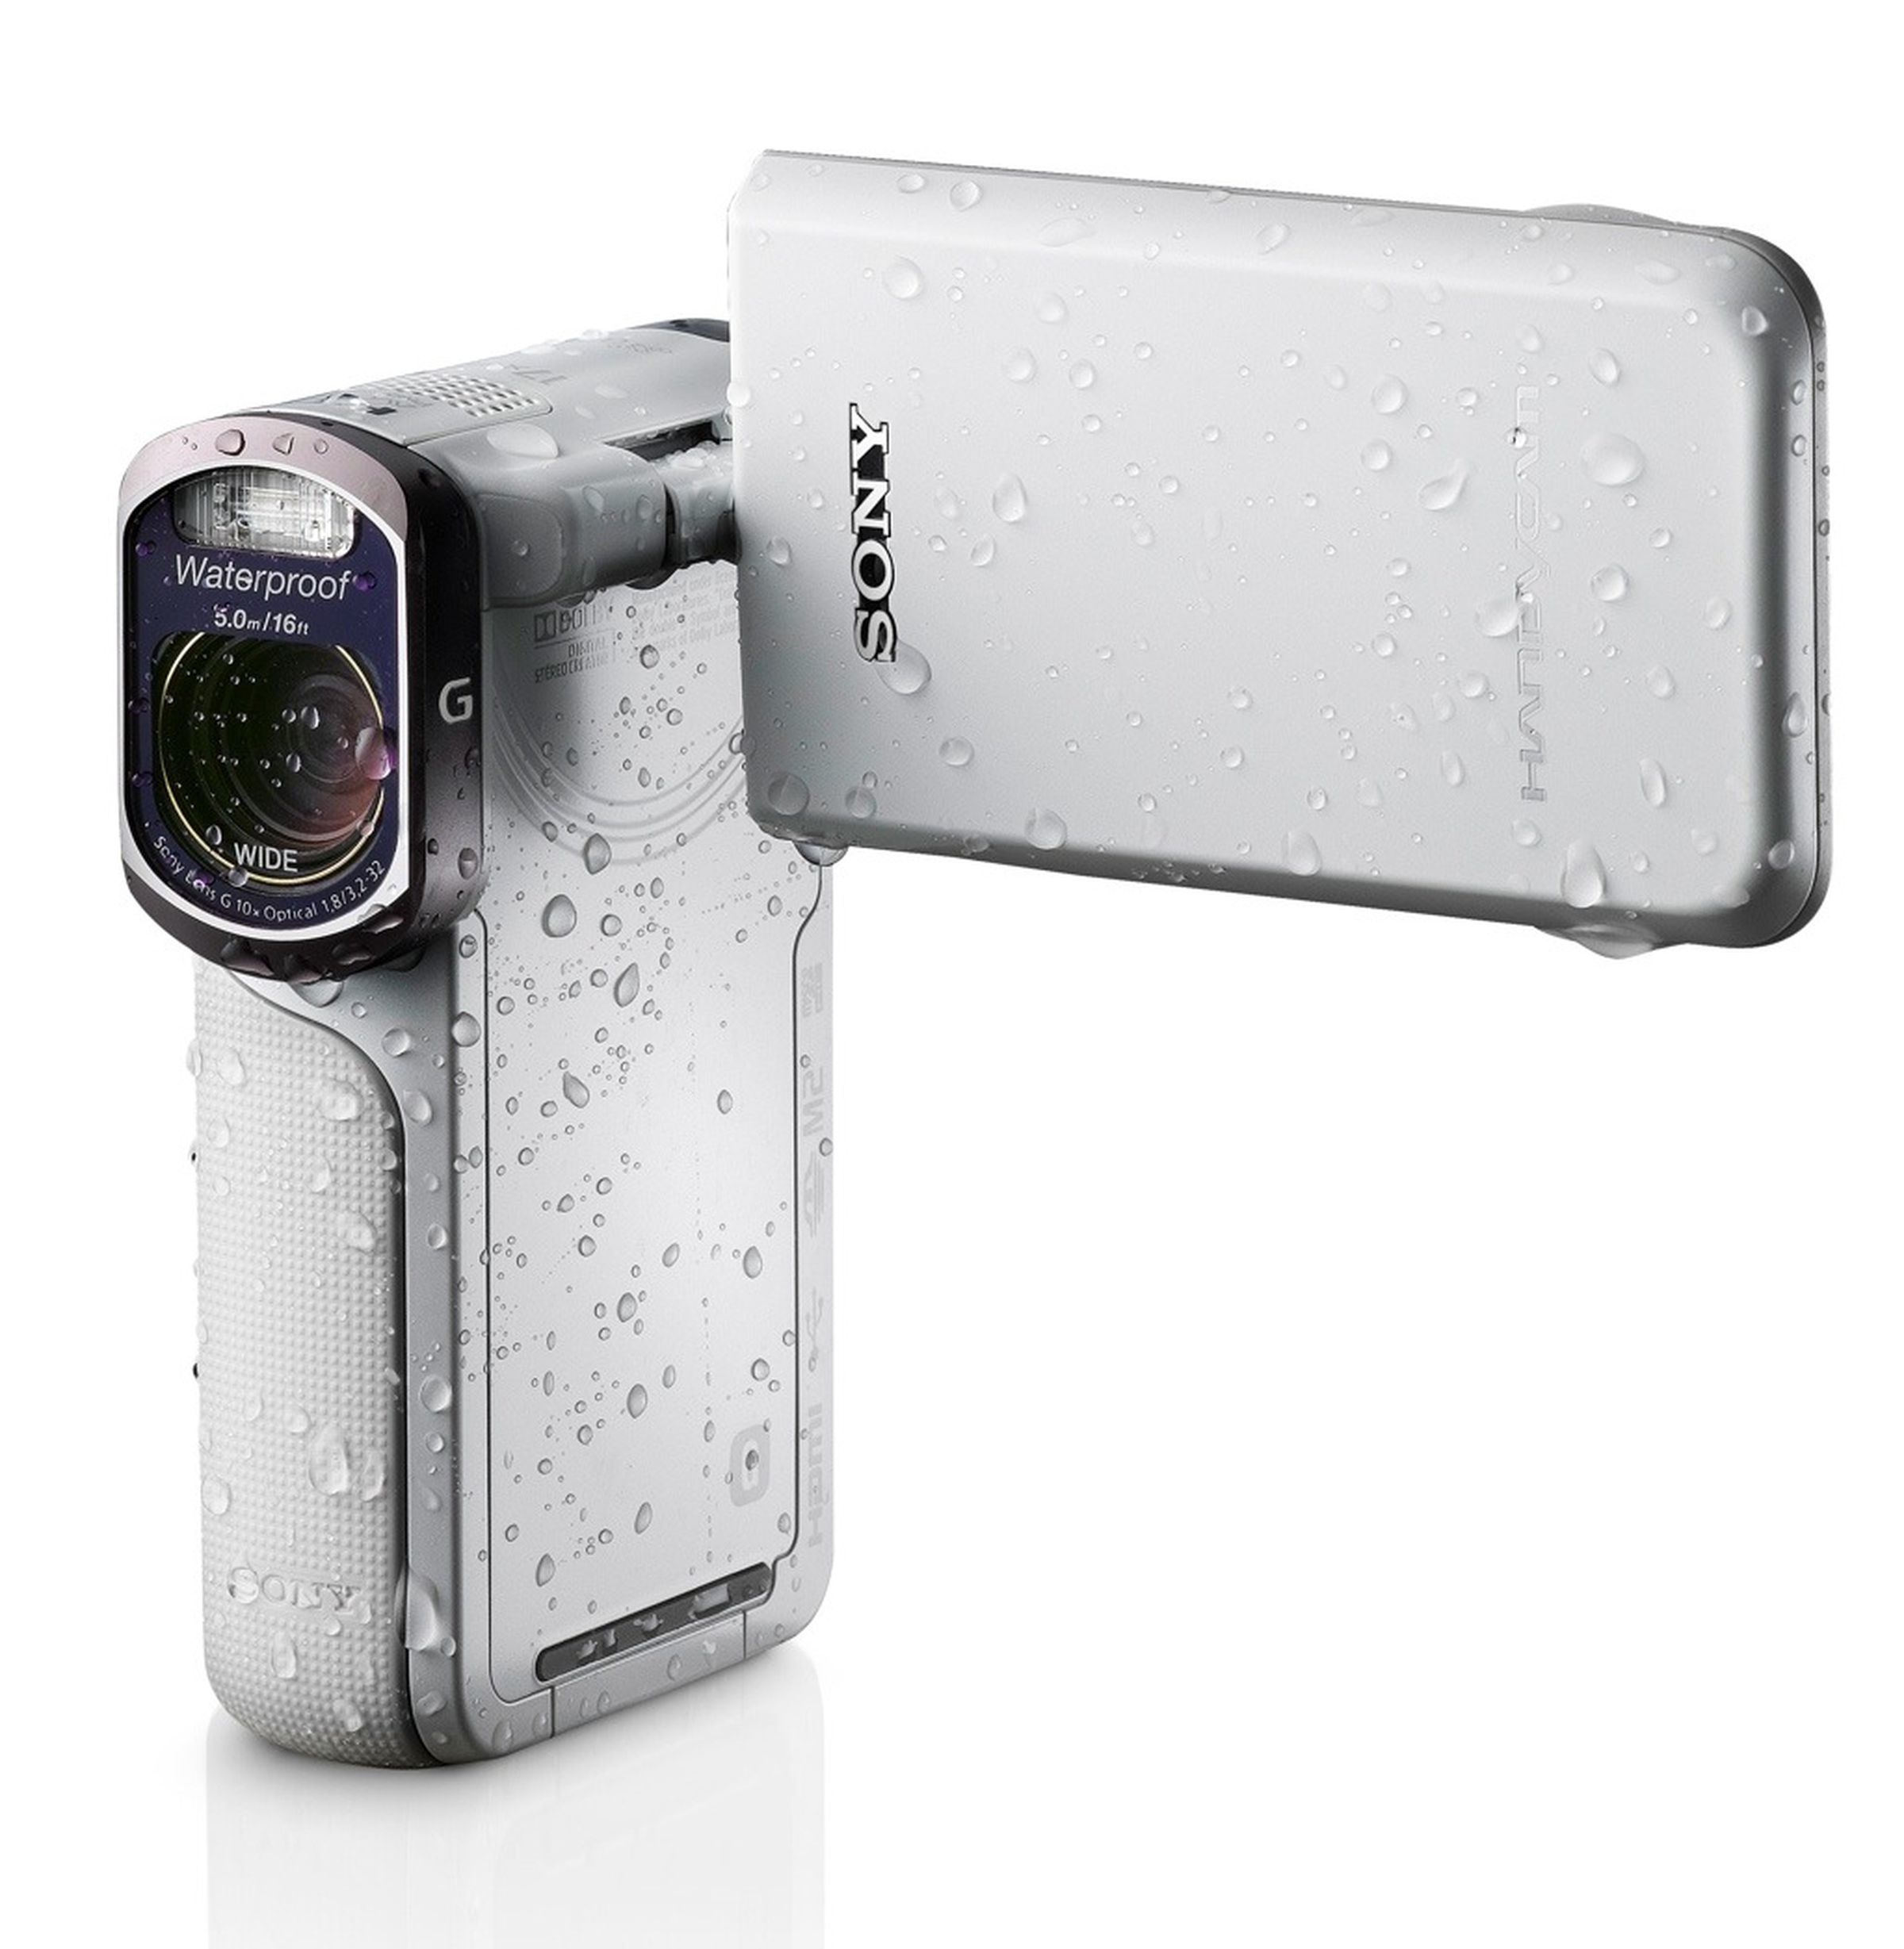 Sony HandyCam HDR-GW77V press photos